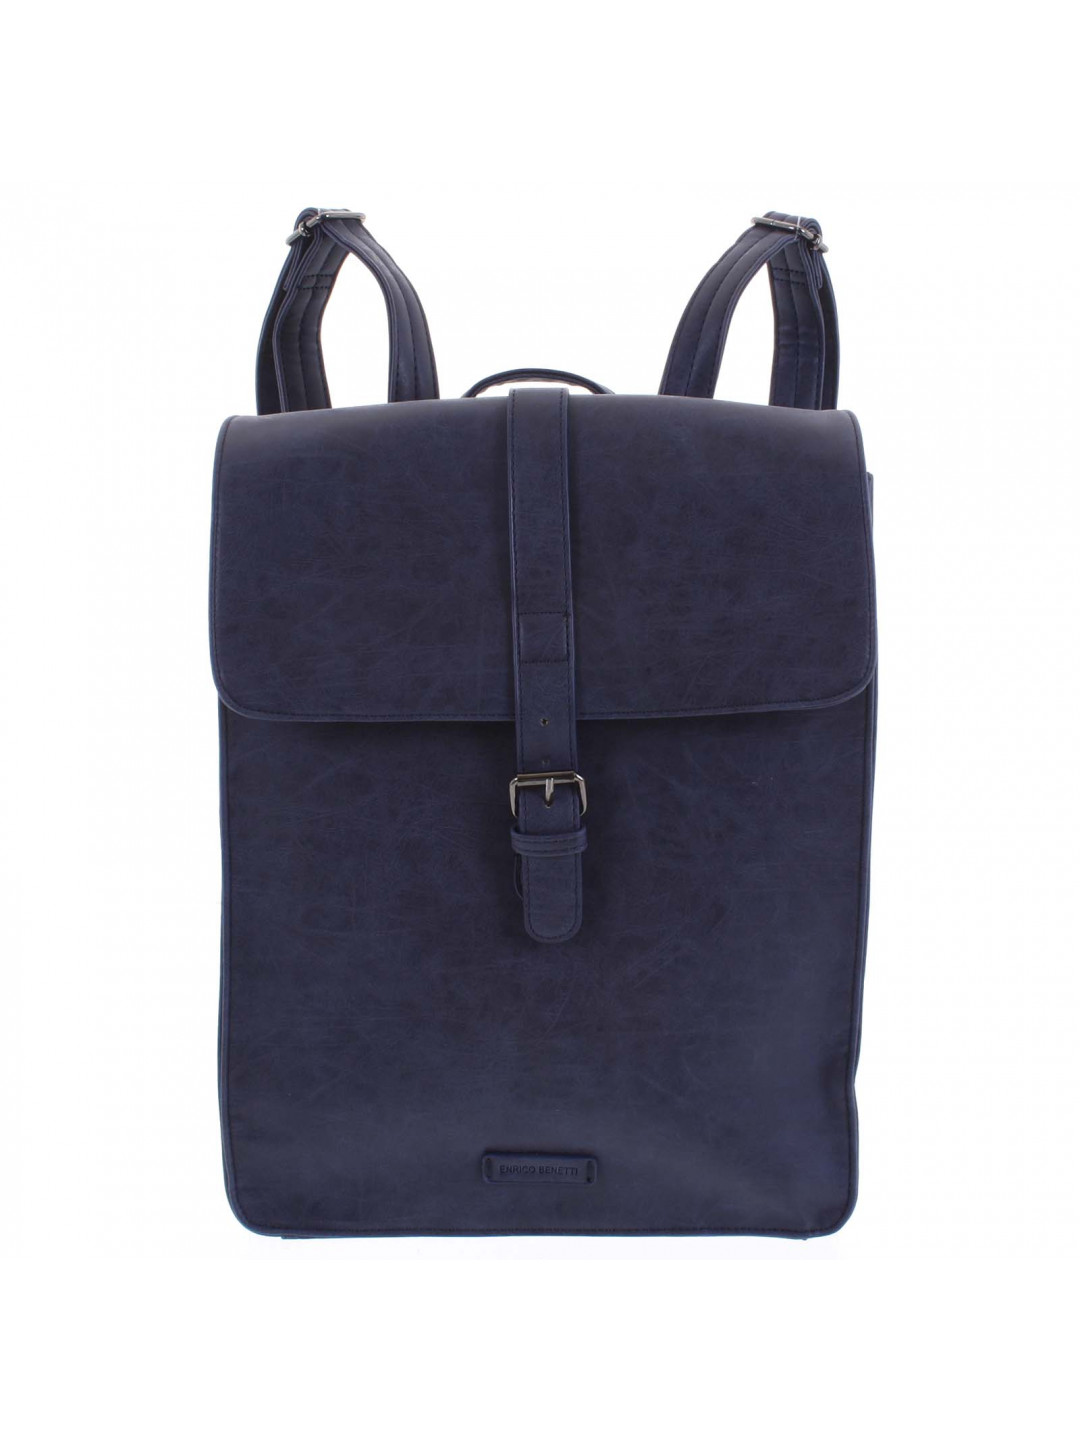 Stylový batoh tmavě modrý – Enrico Benetti Darlo